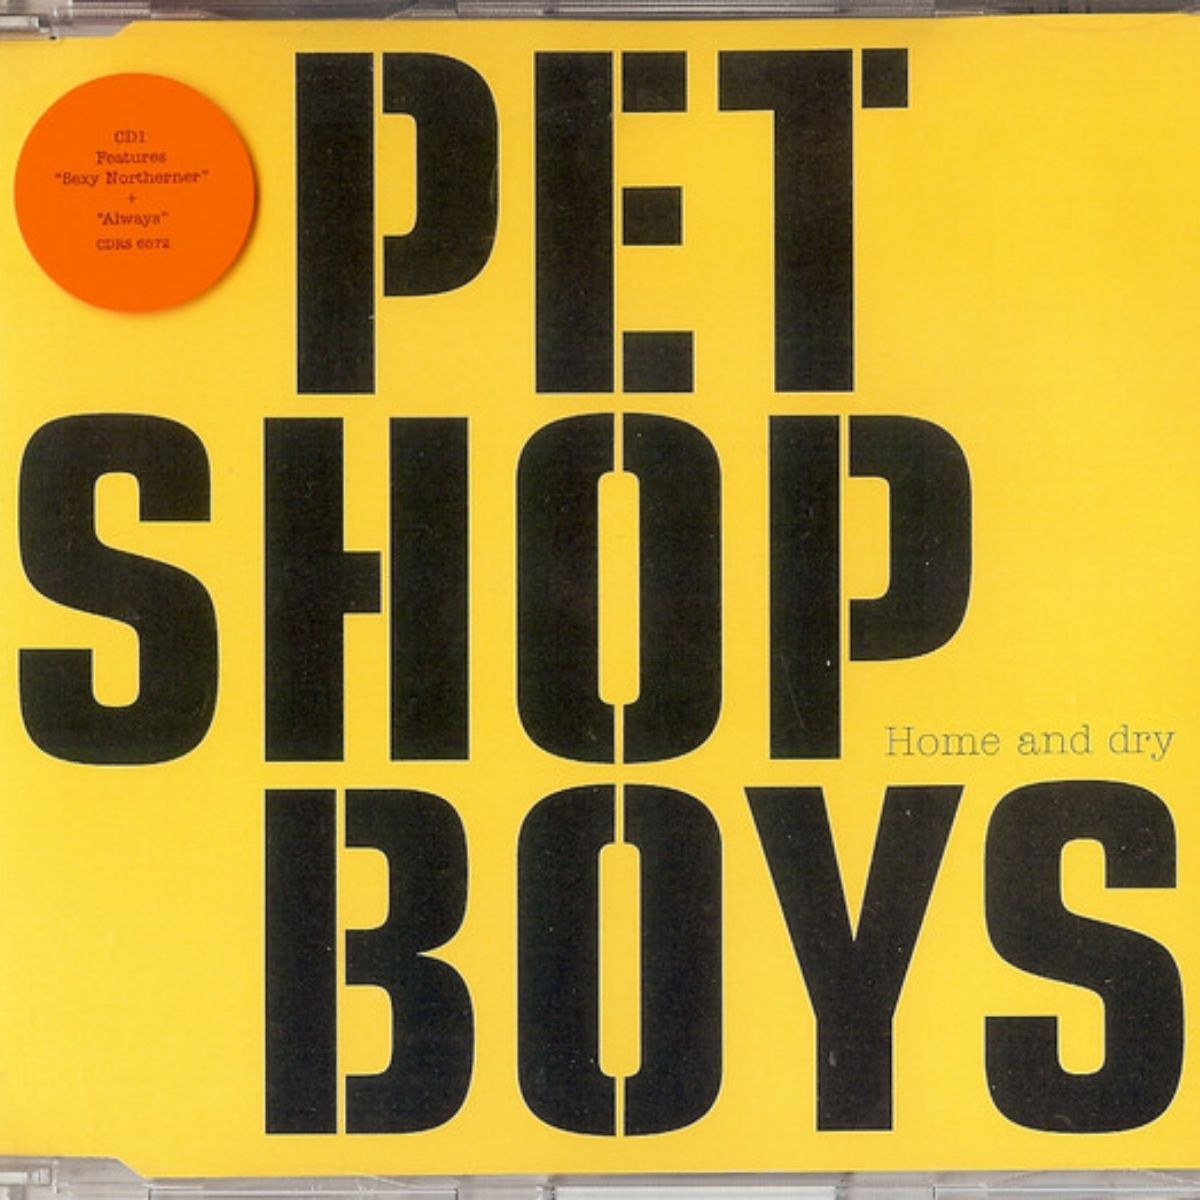 Titelbild der Pet Shop Boys Single "Home and Dry" 